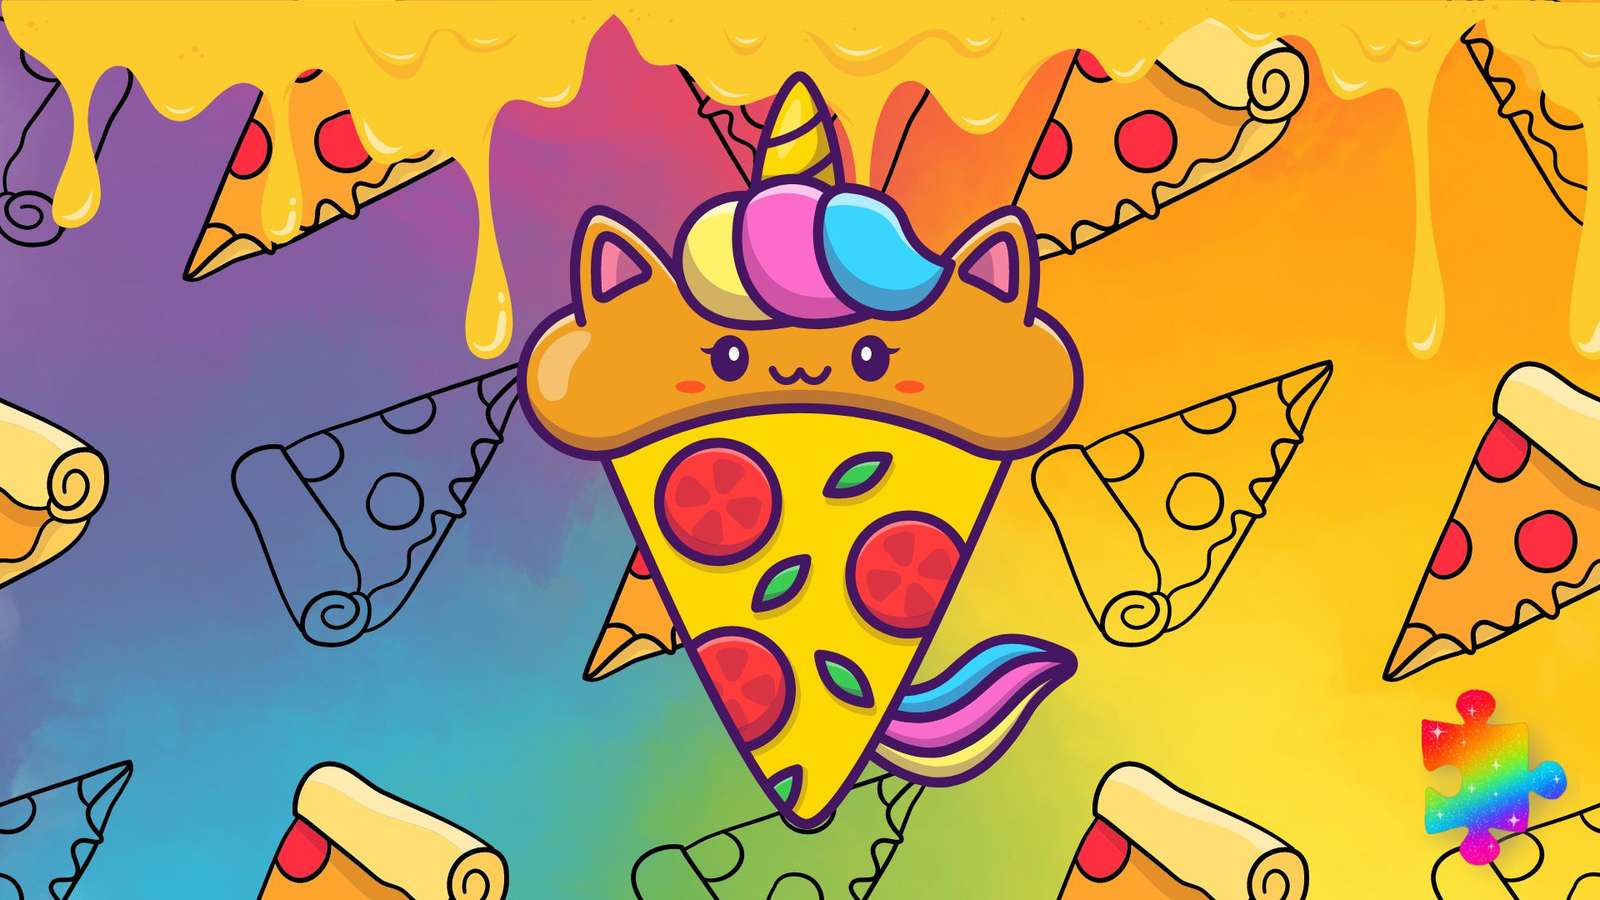 Pizza Jednorożec puzzle online